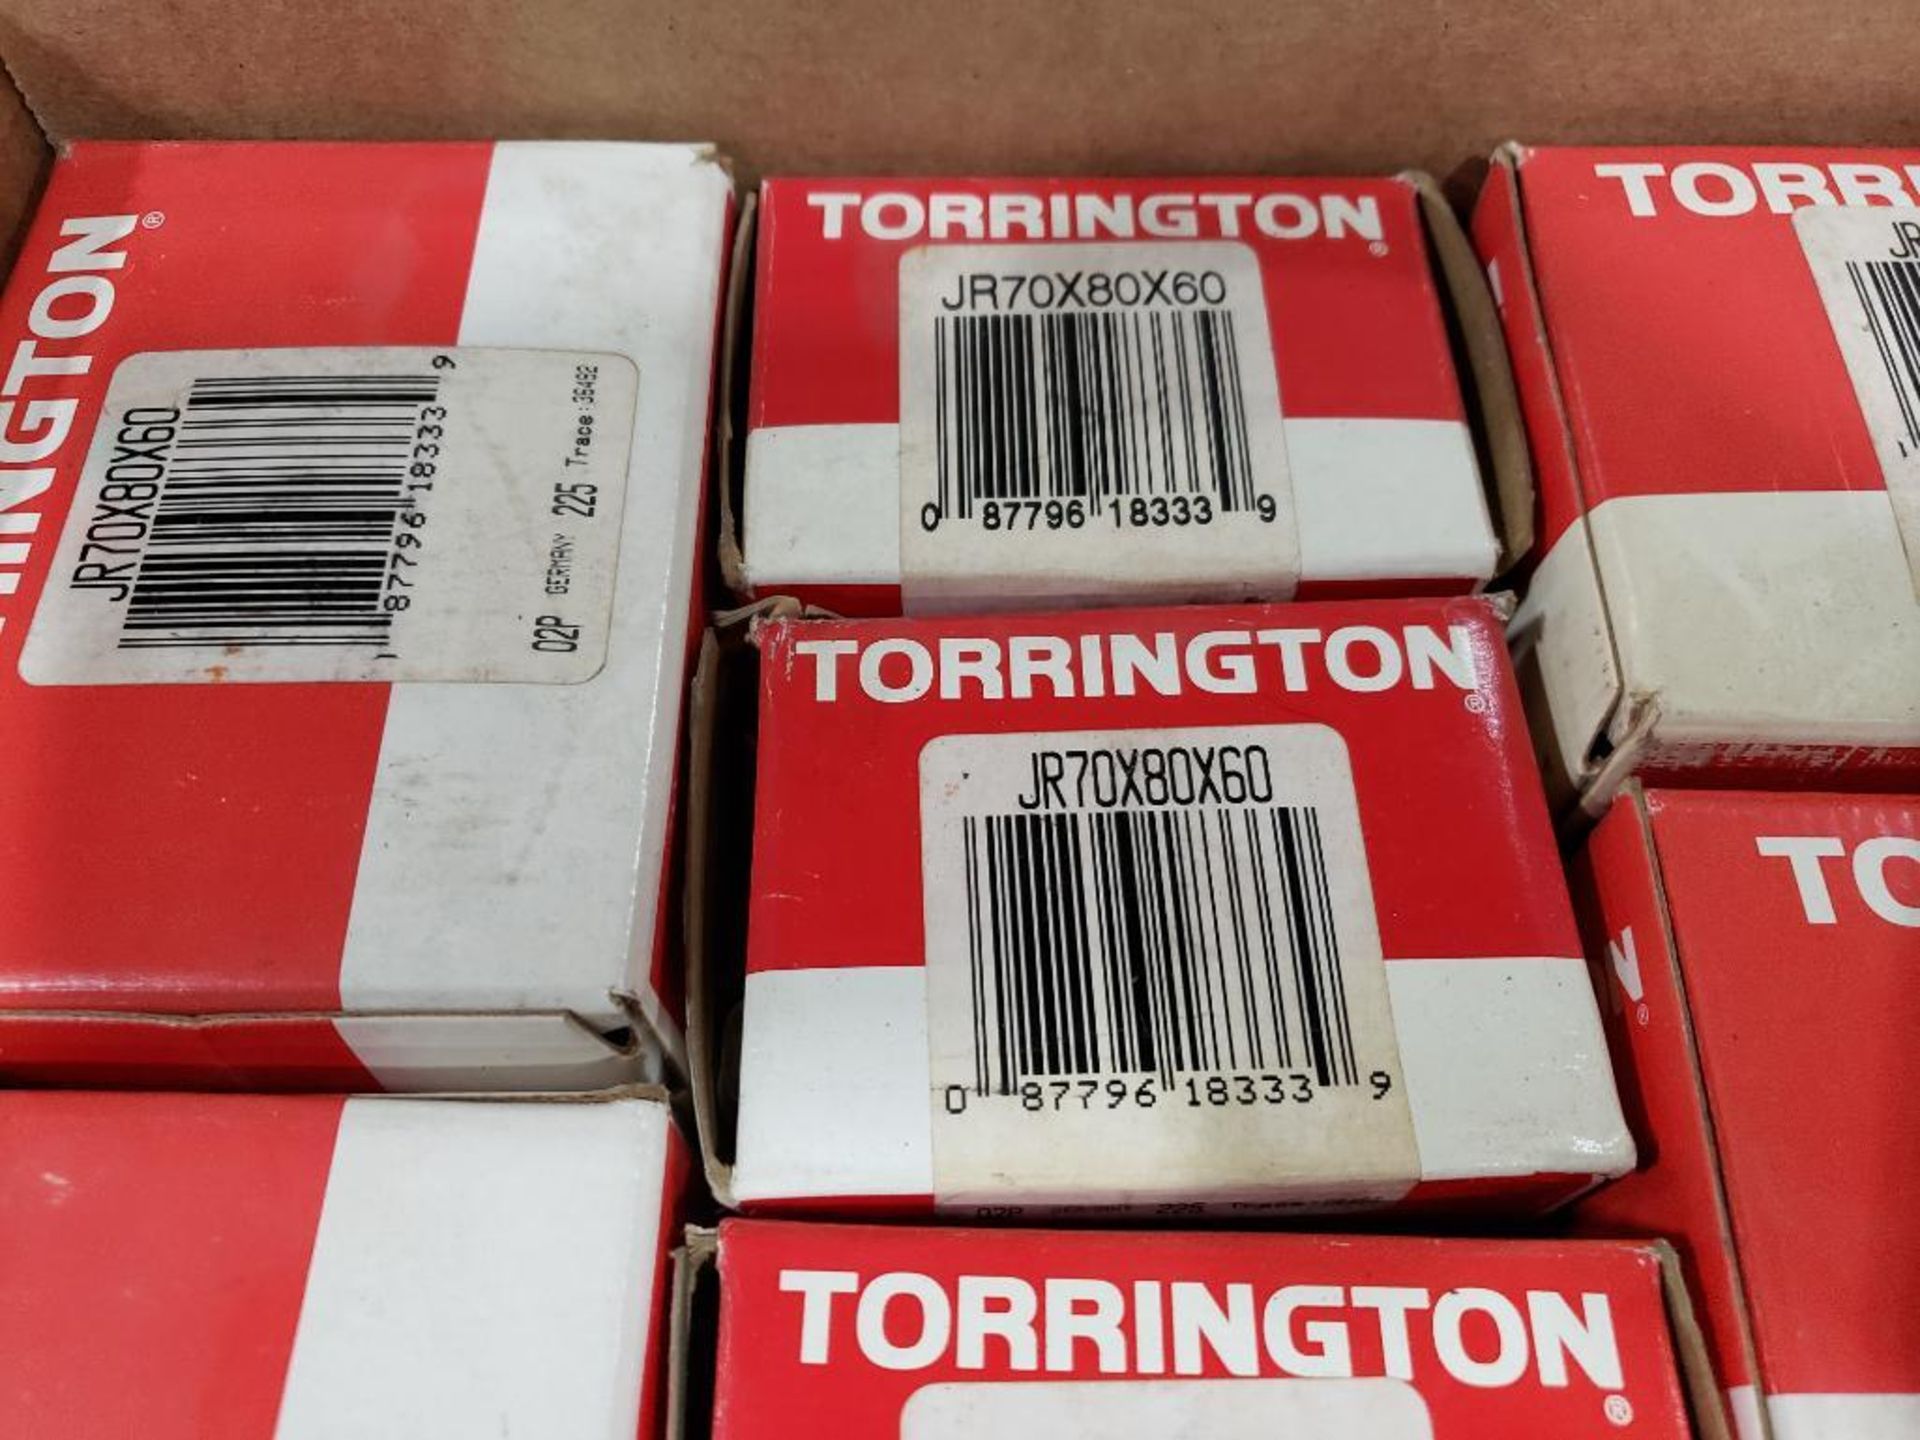 Qty 9 - Assorted Torrington bearings. - Image 7 of 10